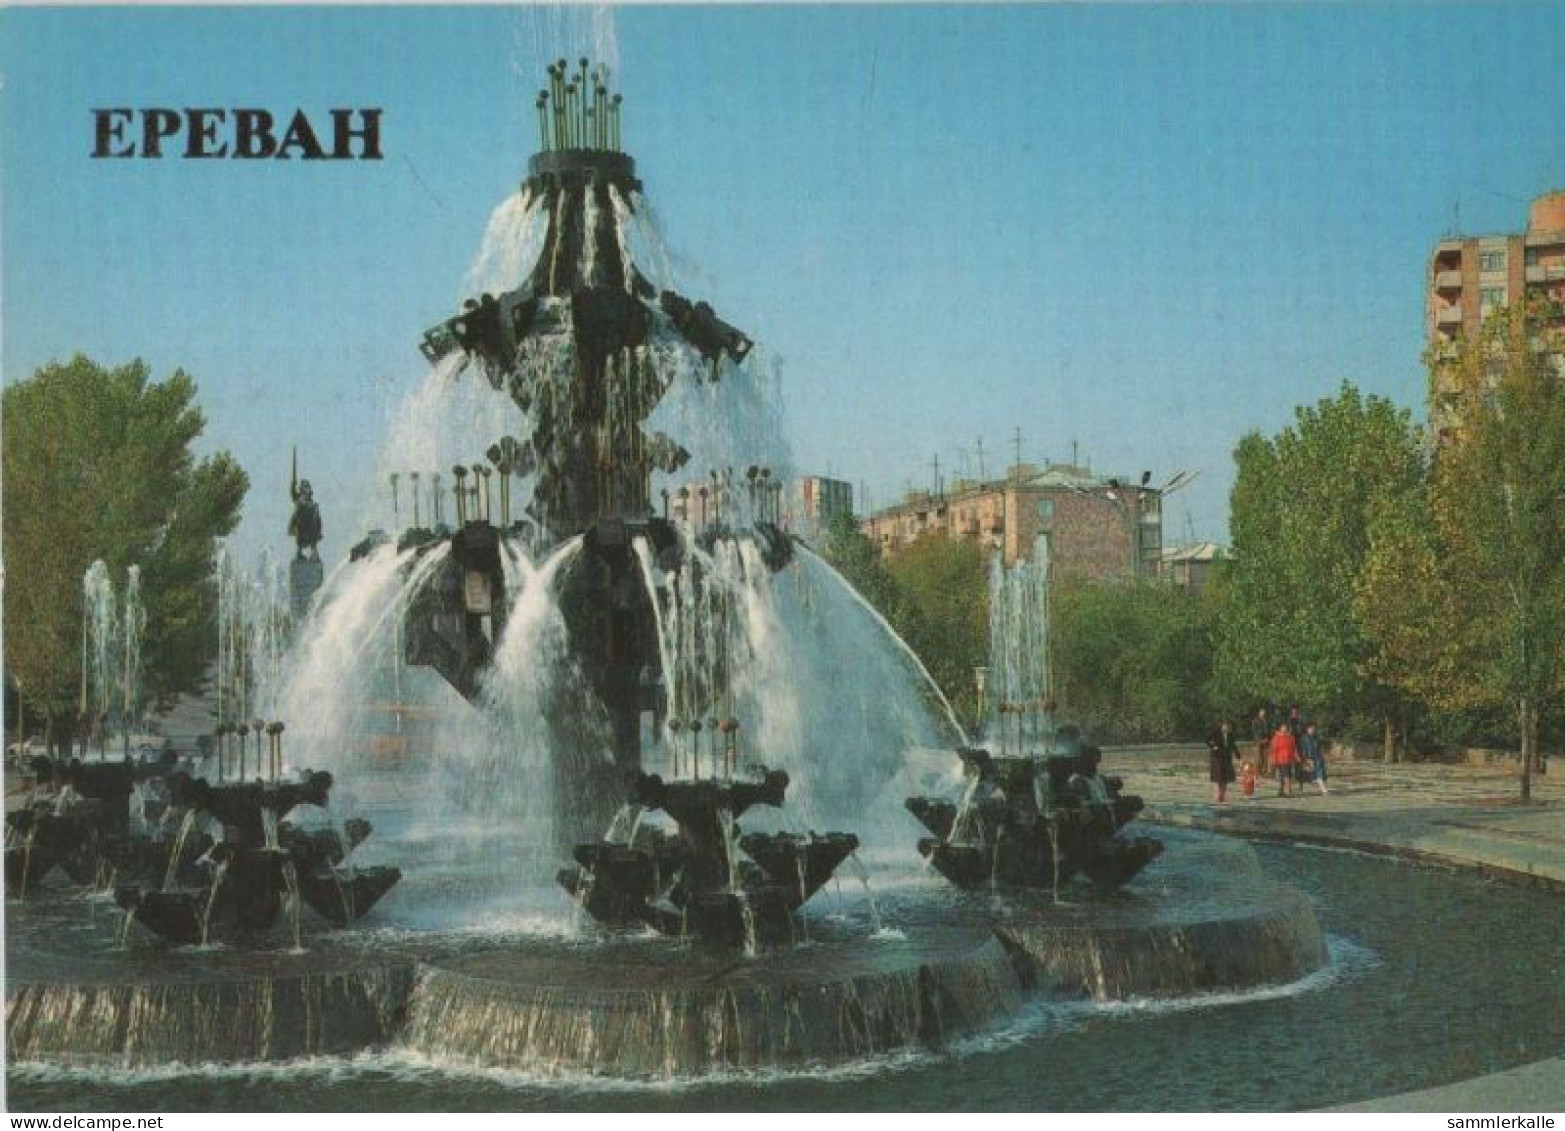 105821 - Armenien - Yerewan - Eriwan - Fountain On Gai - Ca. 1980 - Armenien